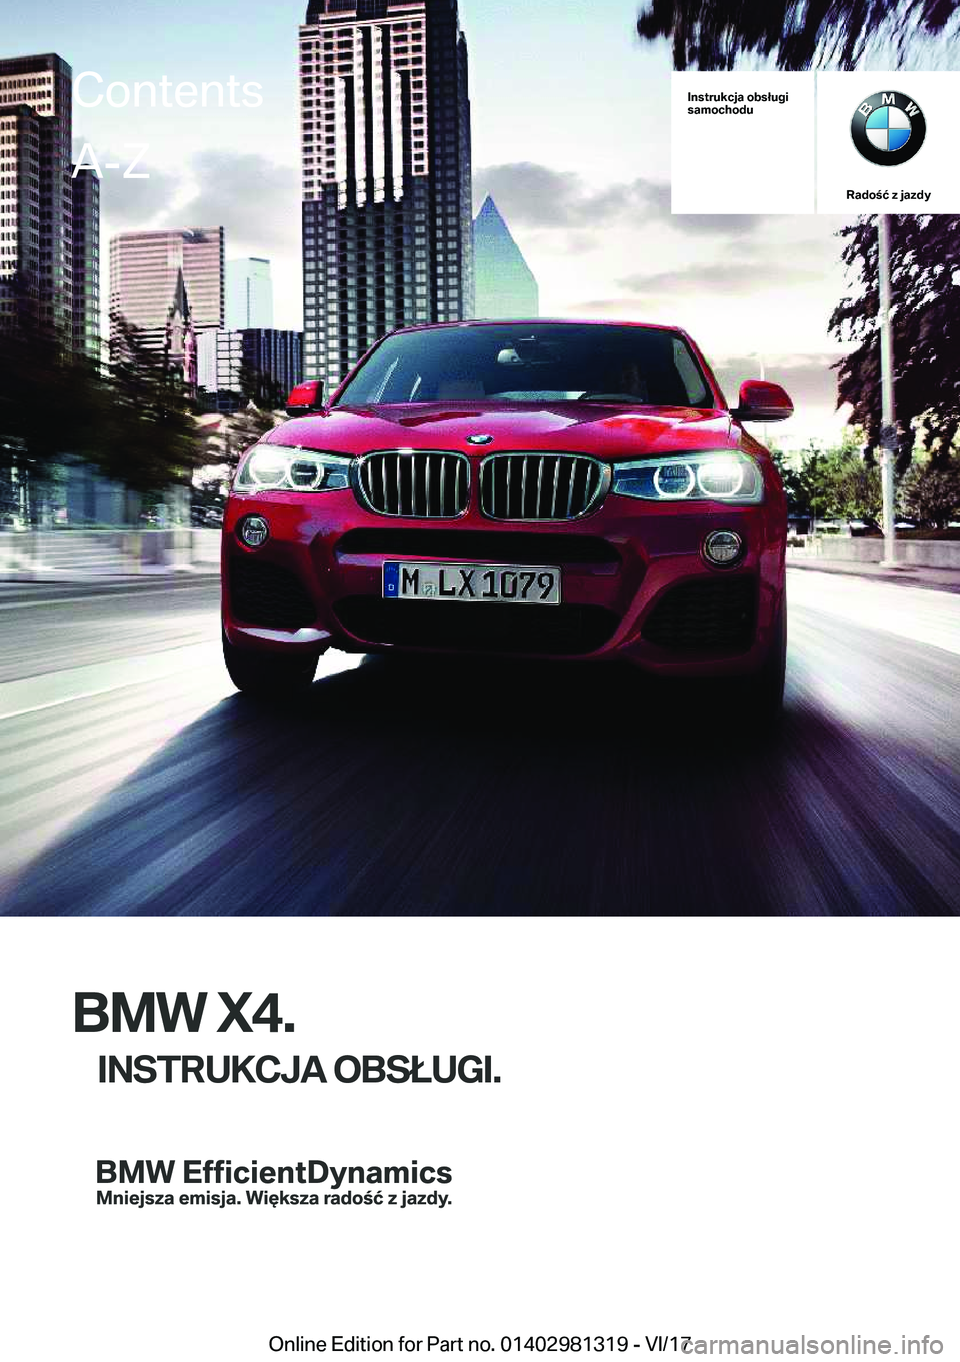 BMW X4 2018  Instrukcja obsługi (in Polish) �I�n�s�t�r�u�k�c�j�a��o�b�s�ł�u�g�i
�s�a�m�o�c�h�o�d�u
�R�a�d�o�